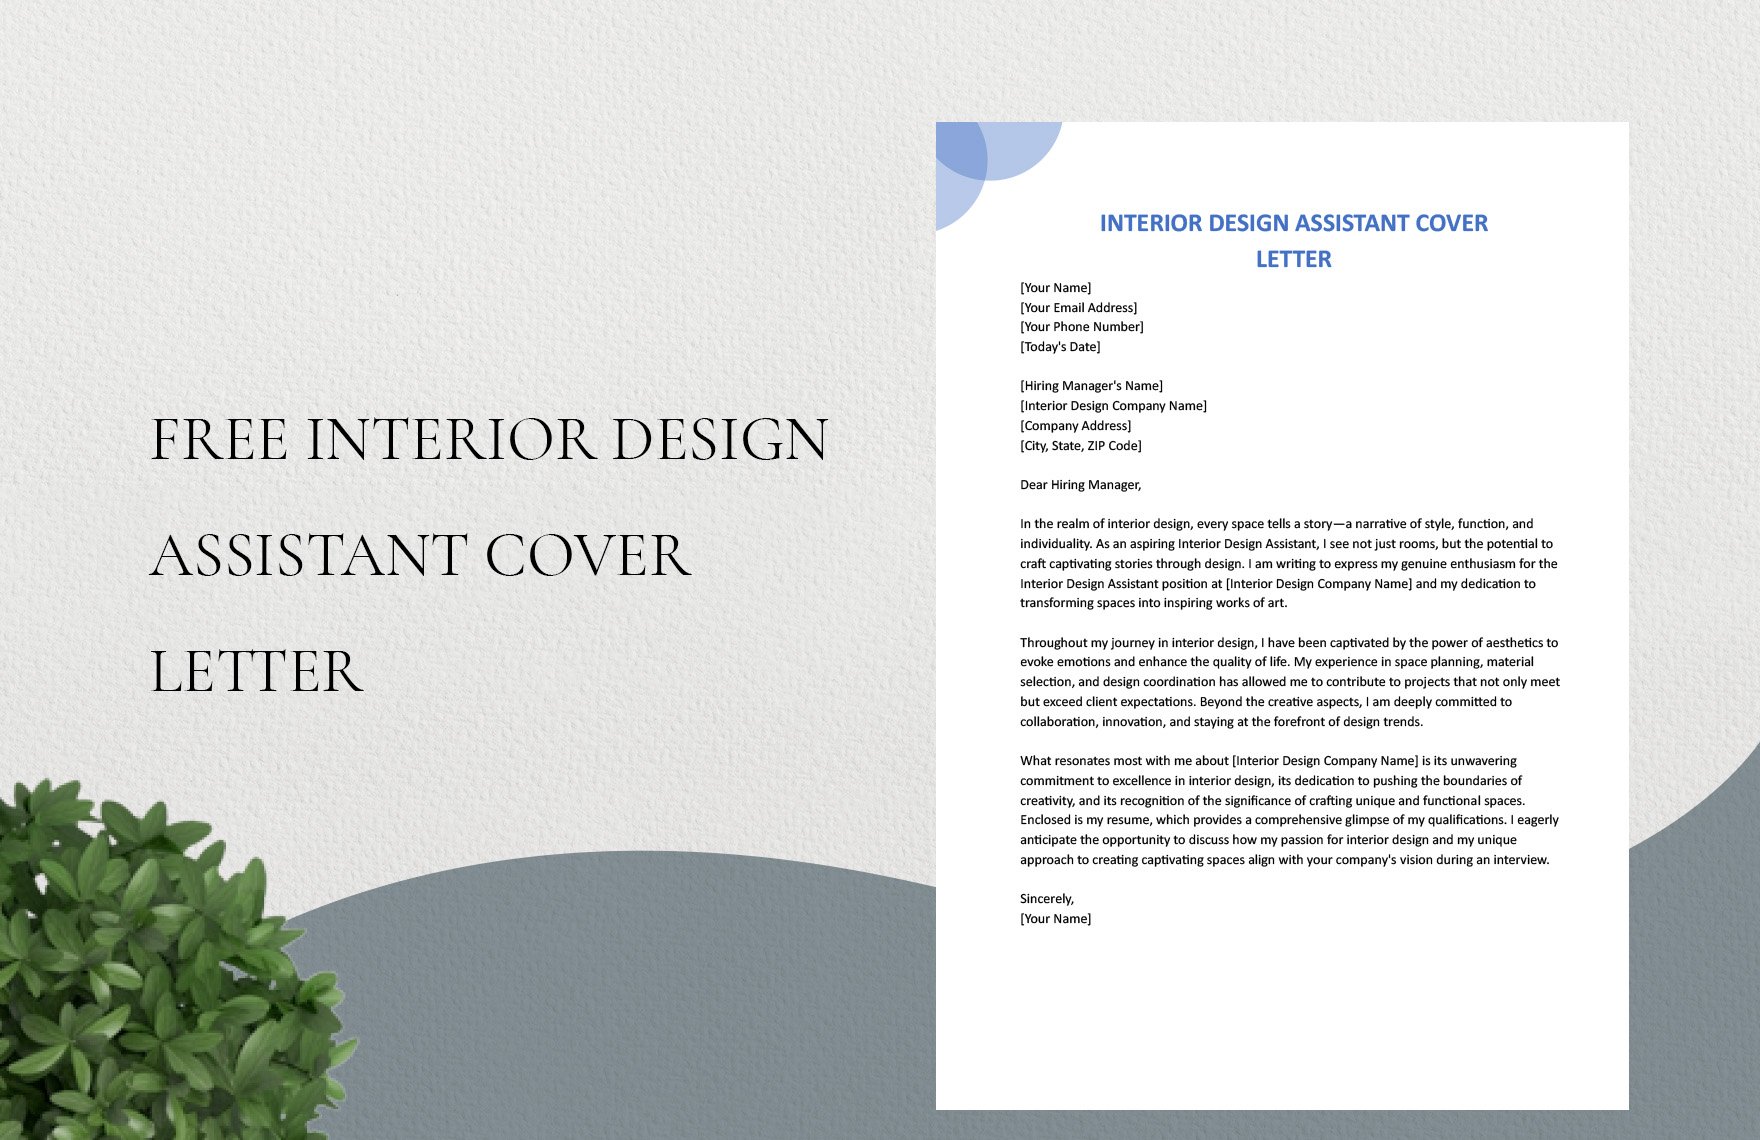 Interior Design Assistant Cover Letter